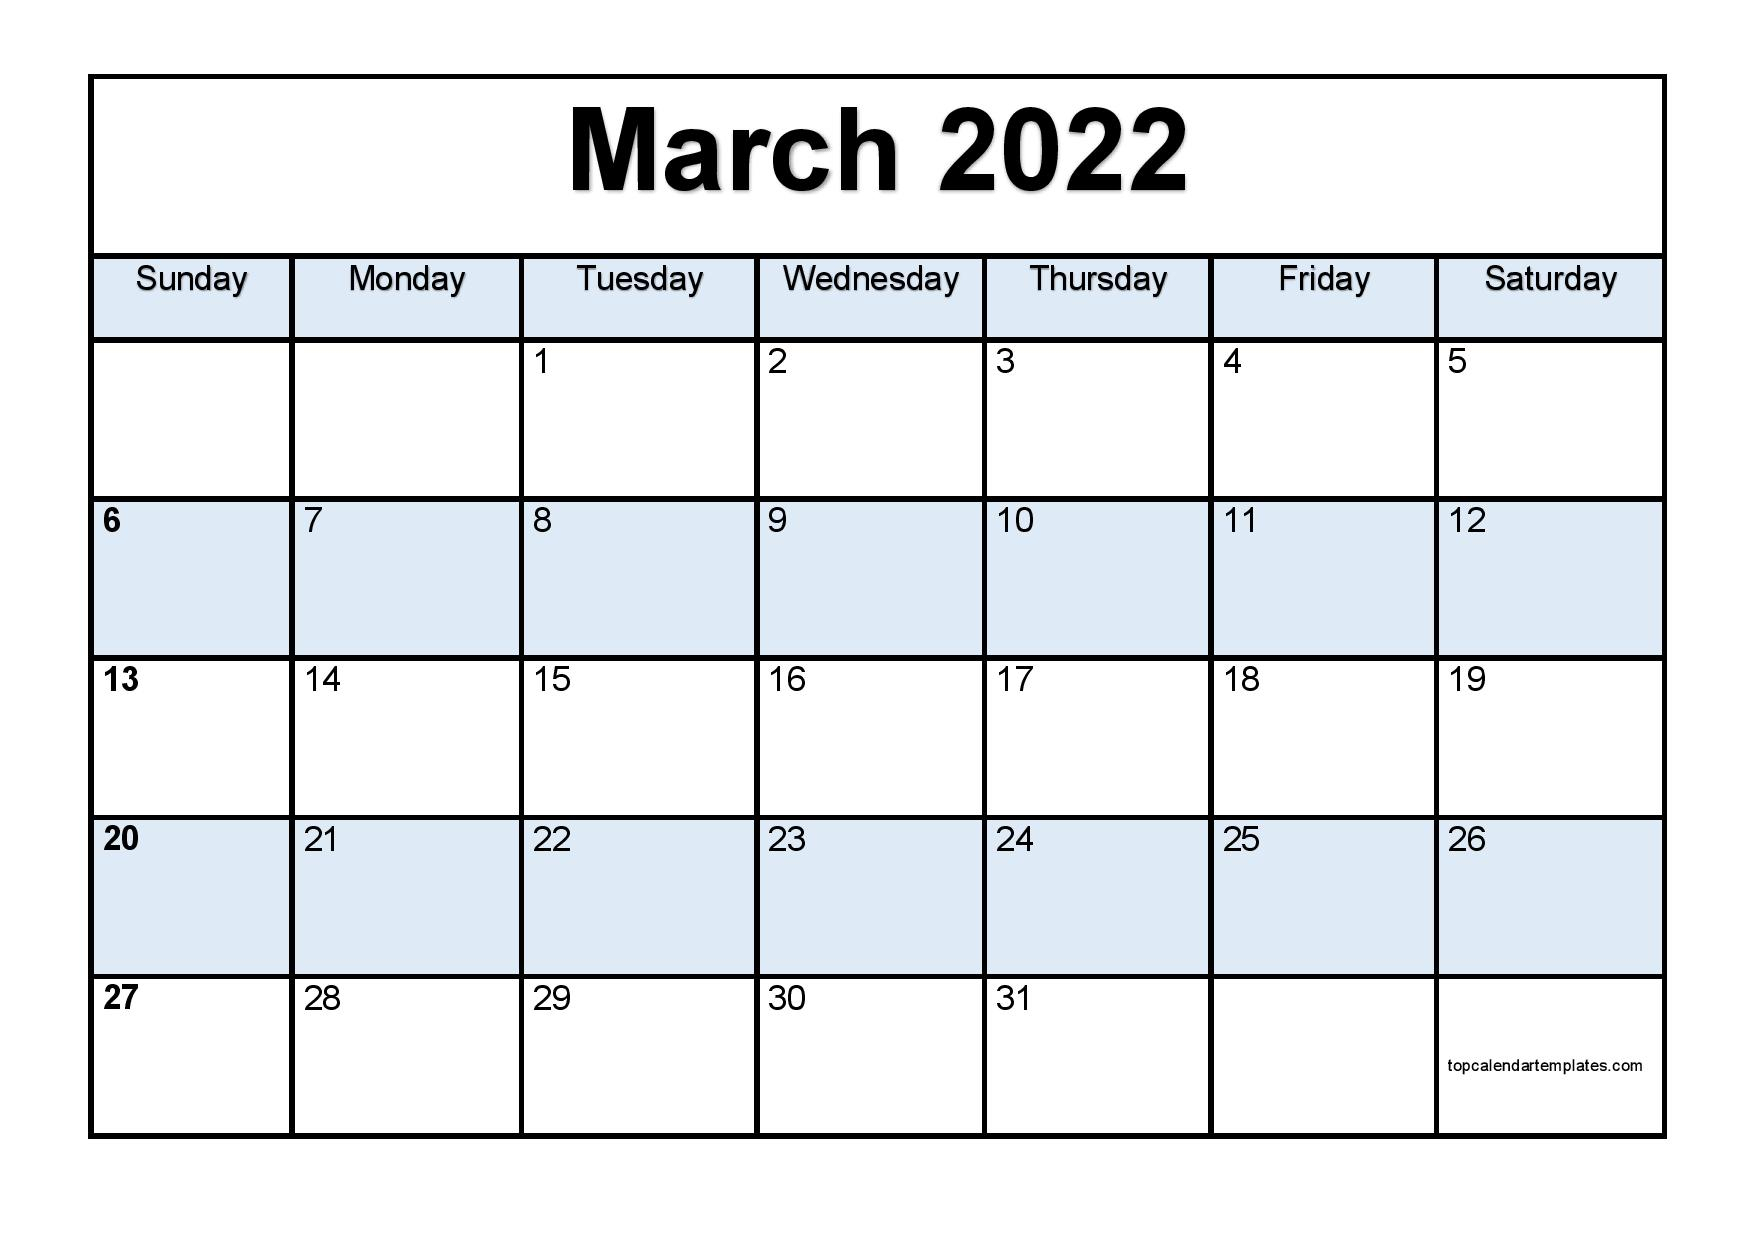 Get Calendar 2022 March With Festivals